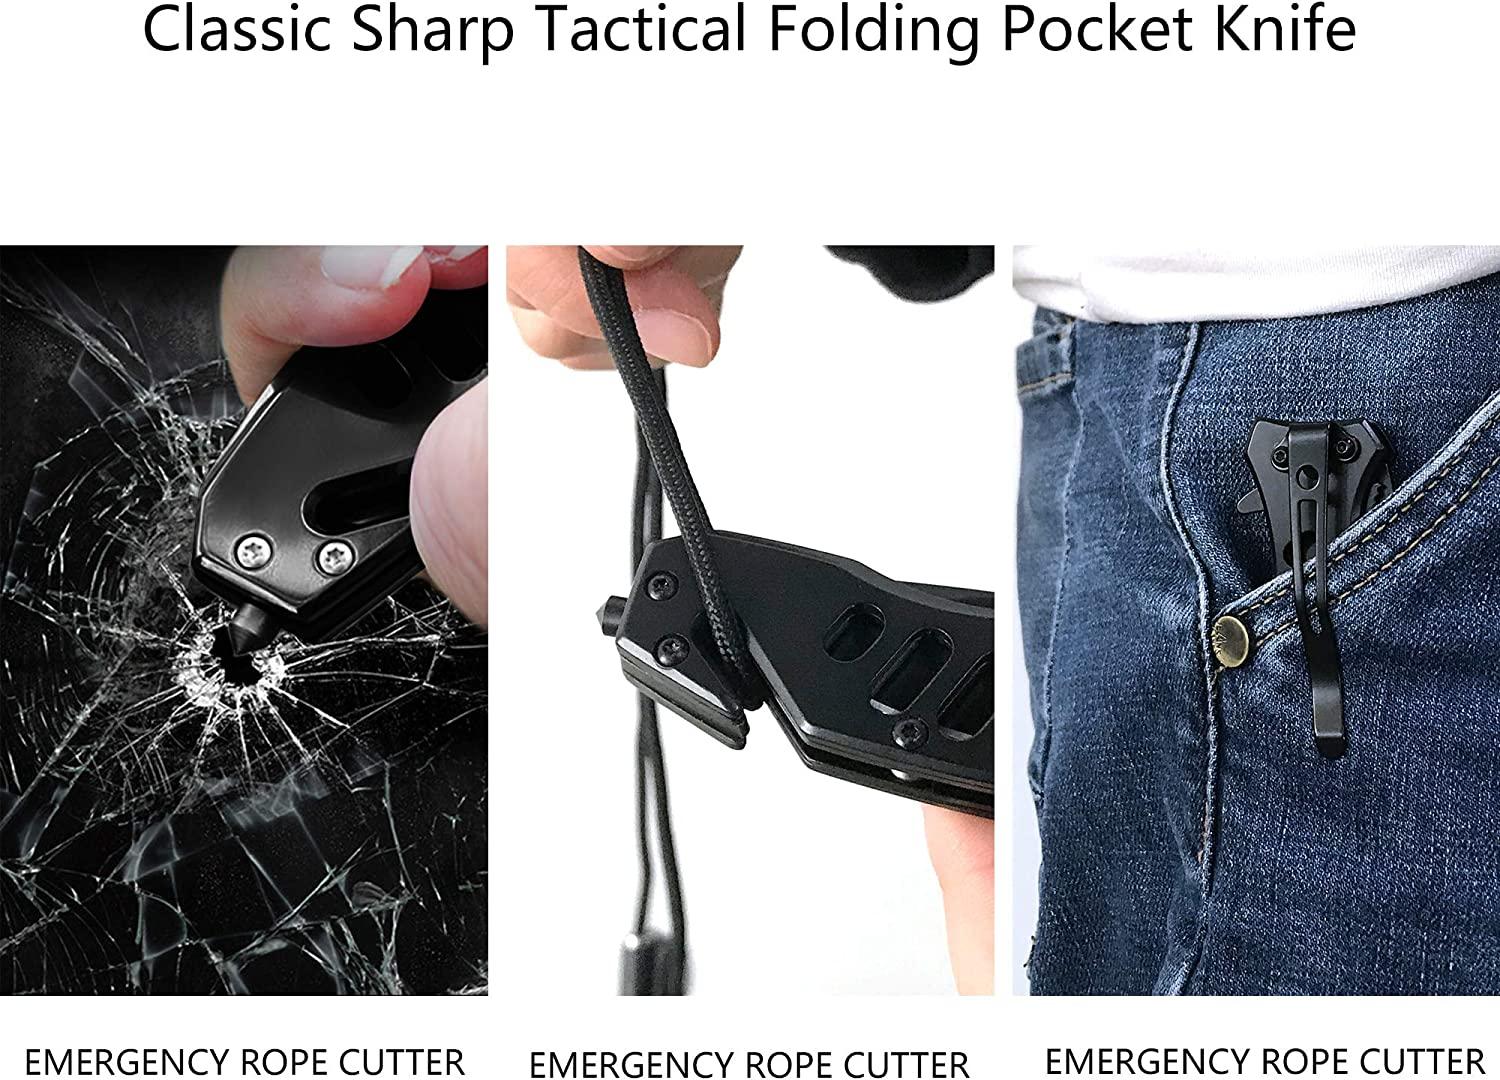  ALBATROSS EDC Cool Sharp Tactical Folding Pocket  Knife,SpeedSafe Spring Assisted Opening Knifes with Liner  Lock,Pocketclip,Glass Breaker,Seatbelt Cutter(Pink) : Tools & Home  Improvement